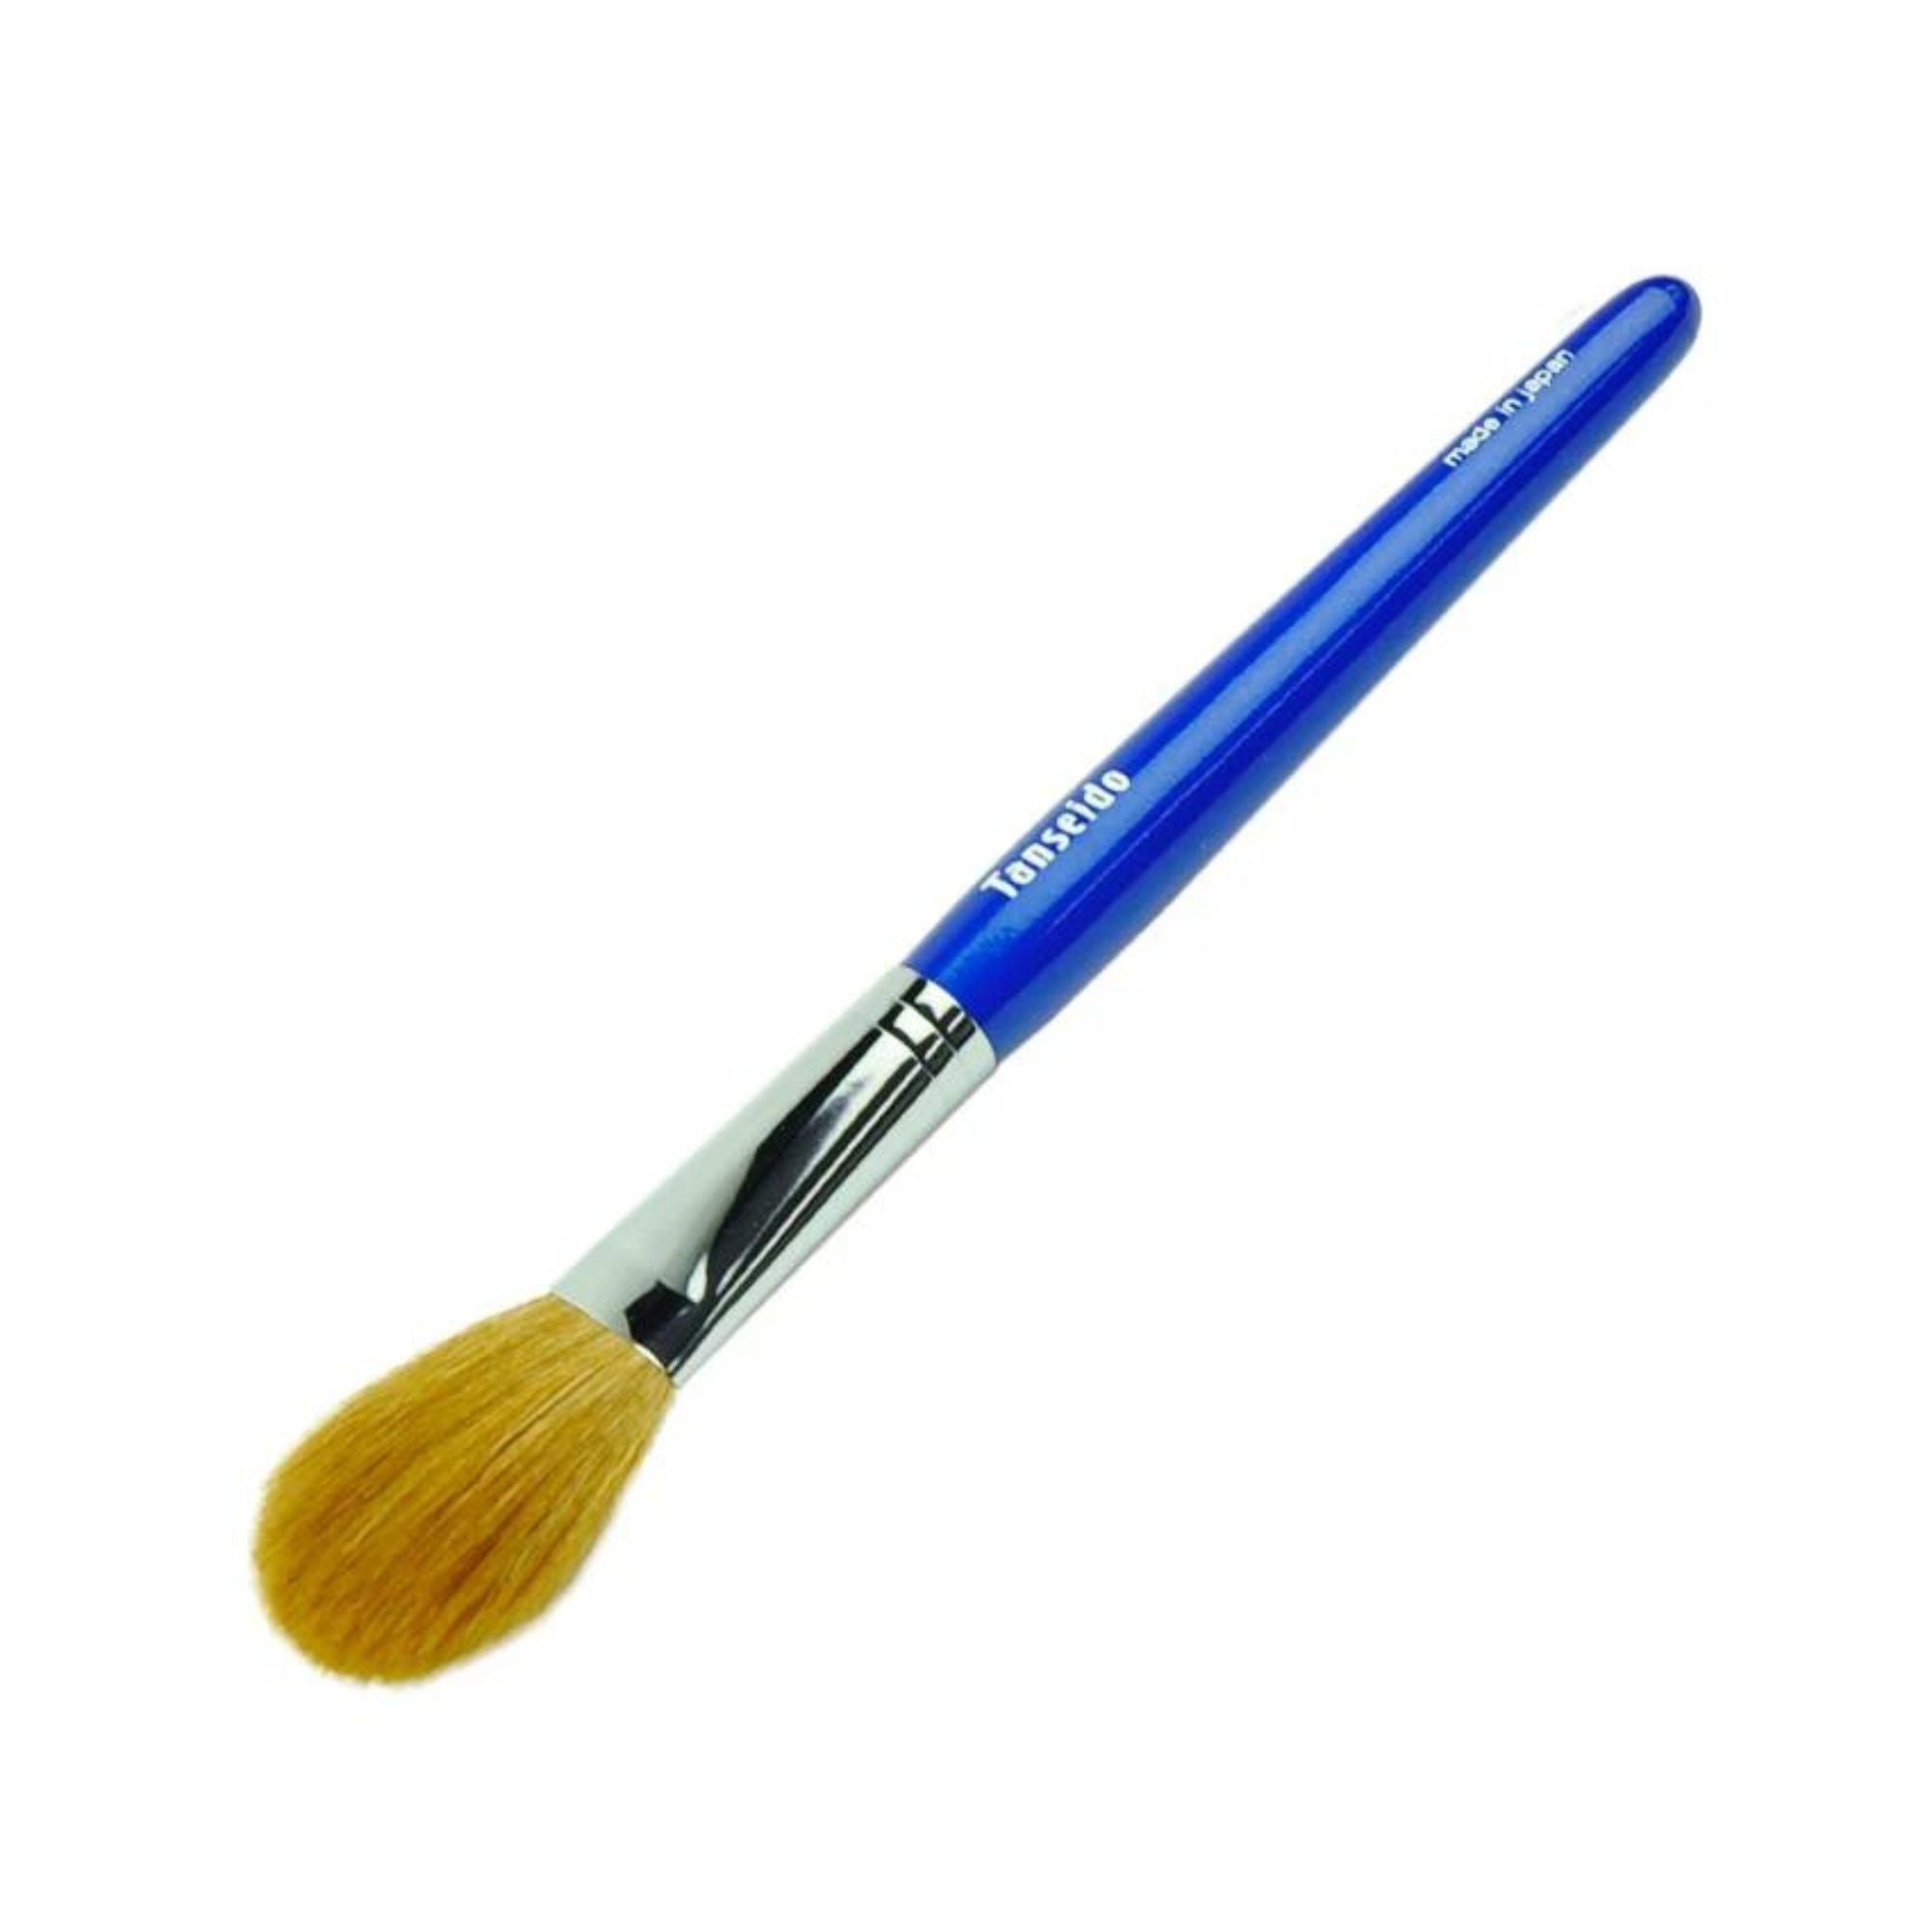 Tanseido Eyeshadow Brush WQ14T - Fude Beauty, Japanese Makeup Brushes